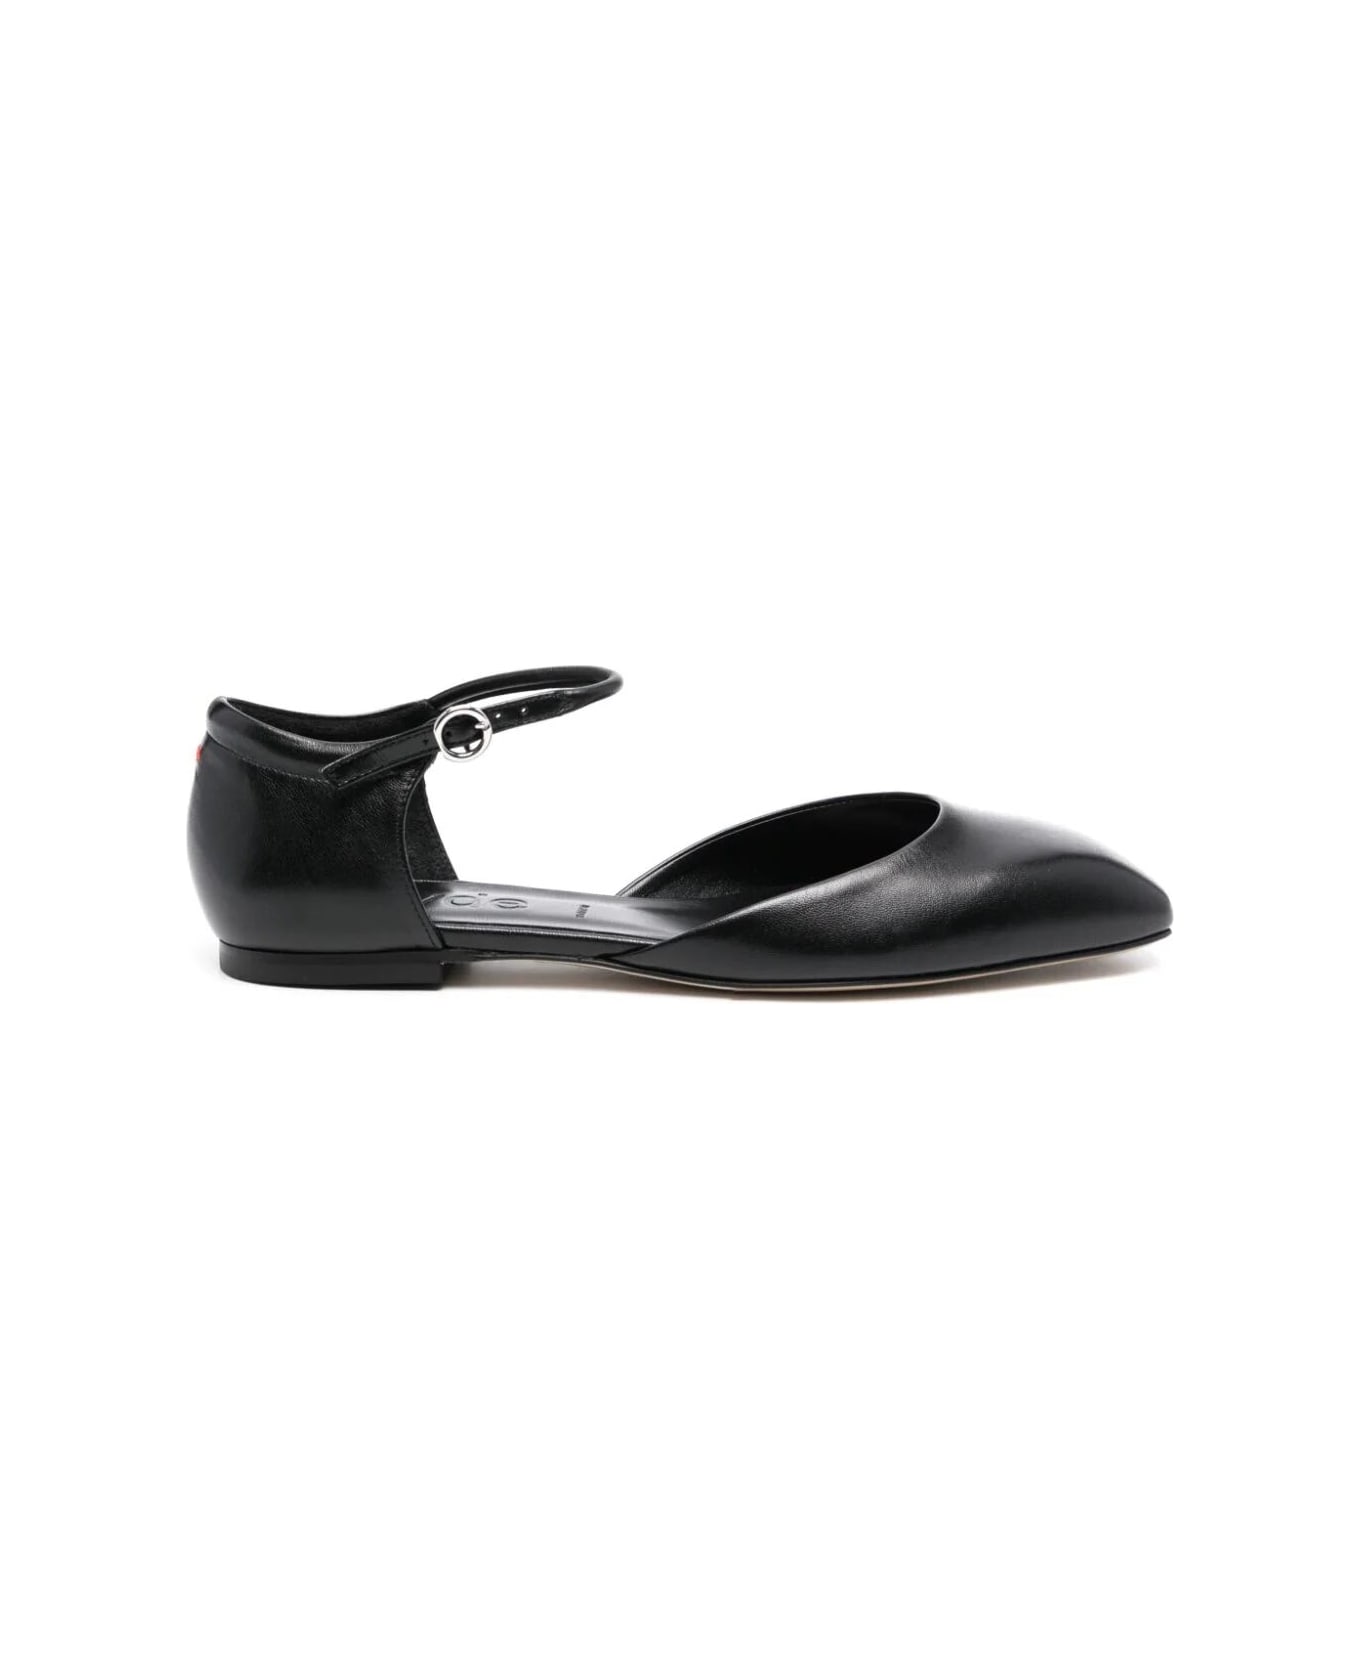 aeyde Miri Nappa Leather Black Shoes - Black